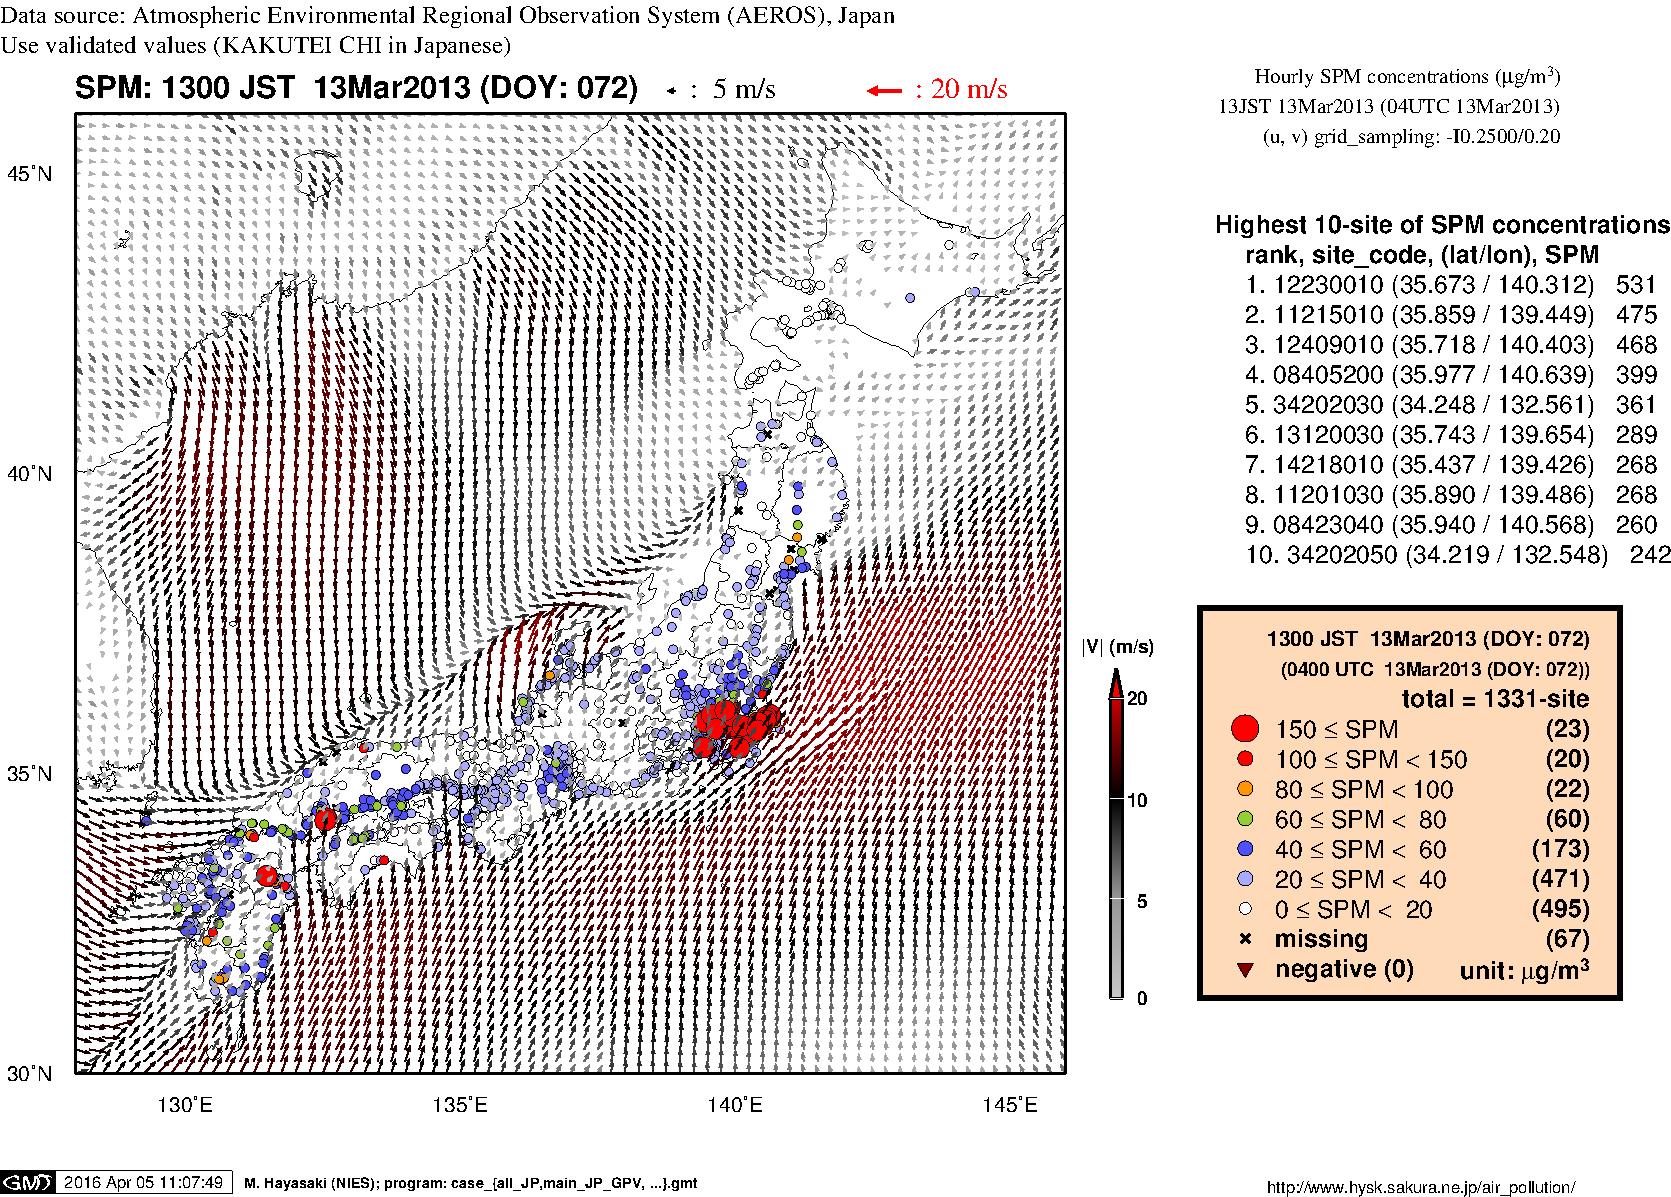 SPM concentration in mainland Japan (13JST 13Mar2013)